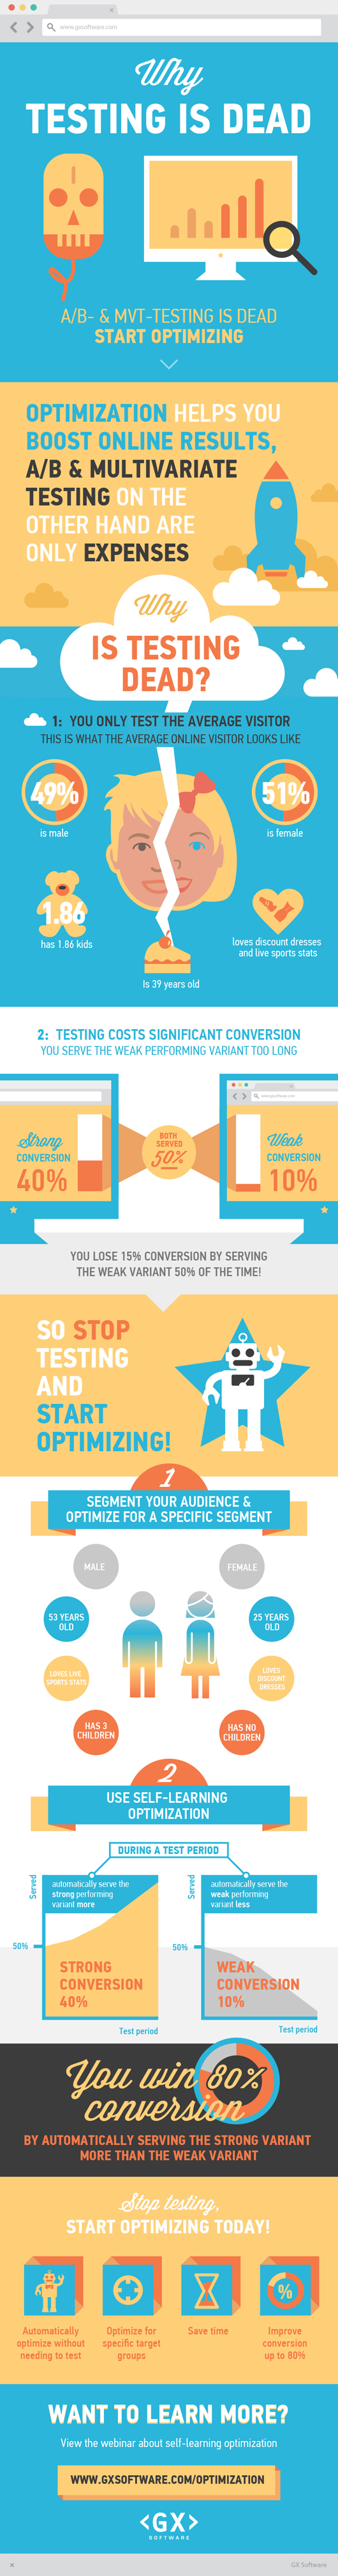 Infographic: Testing is dead, start optimizing